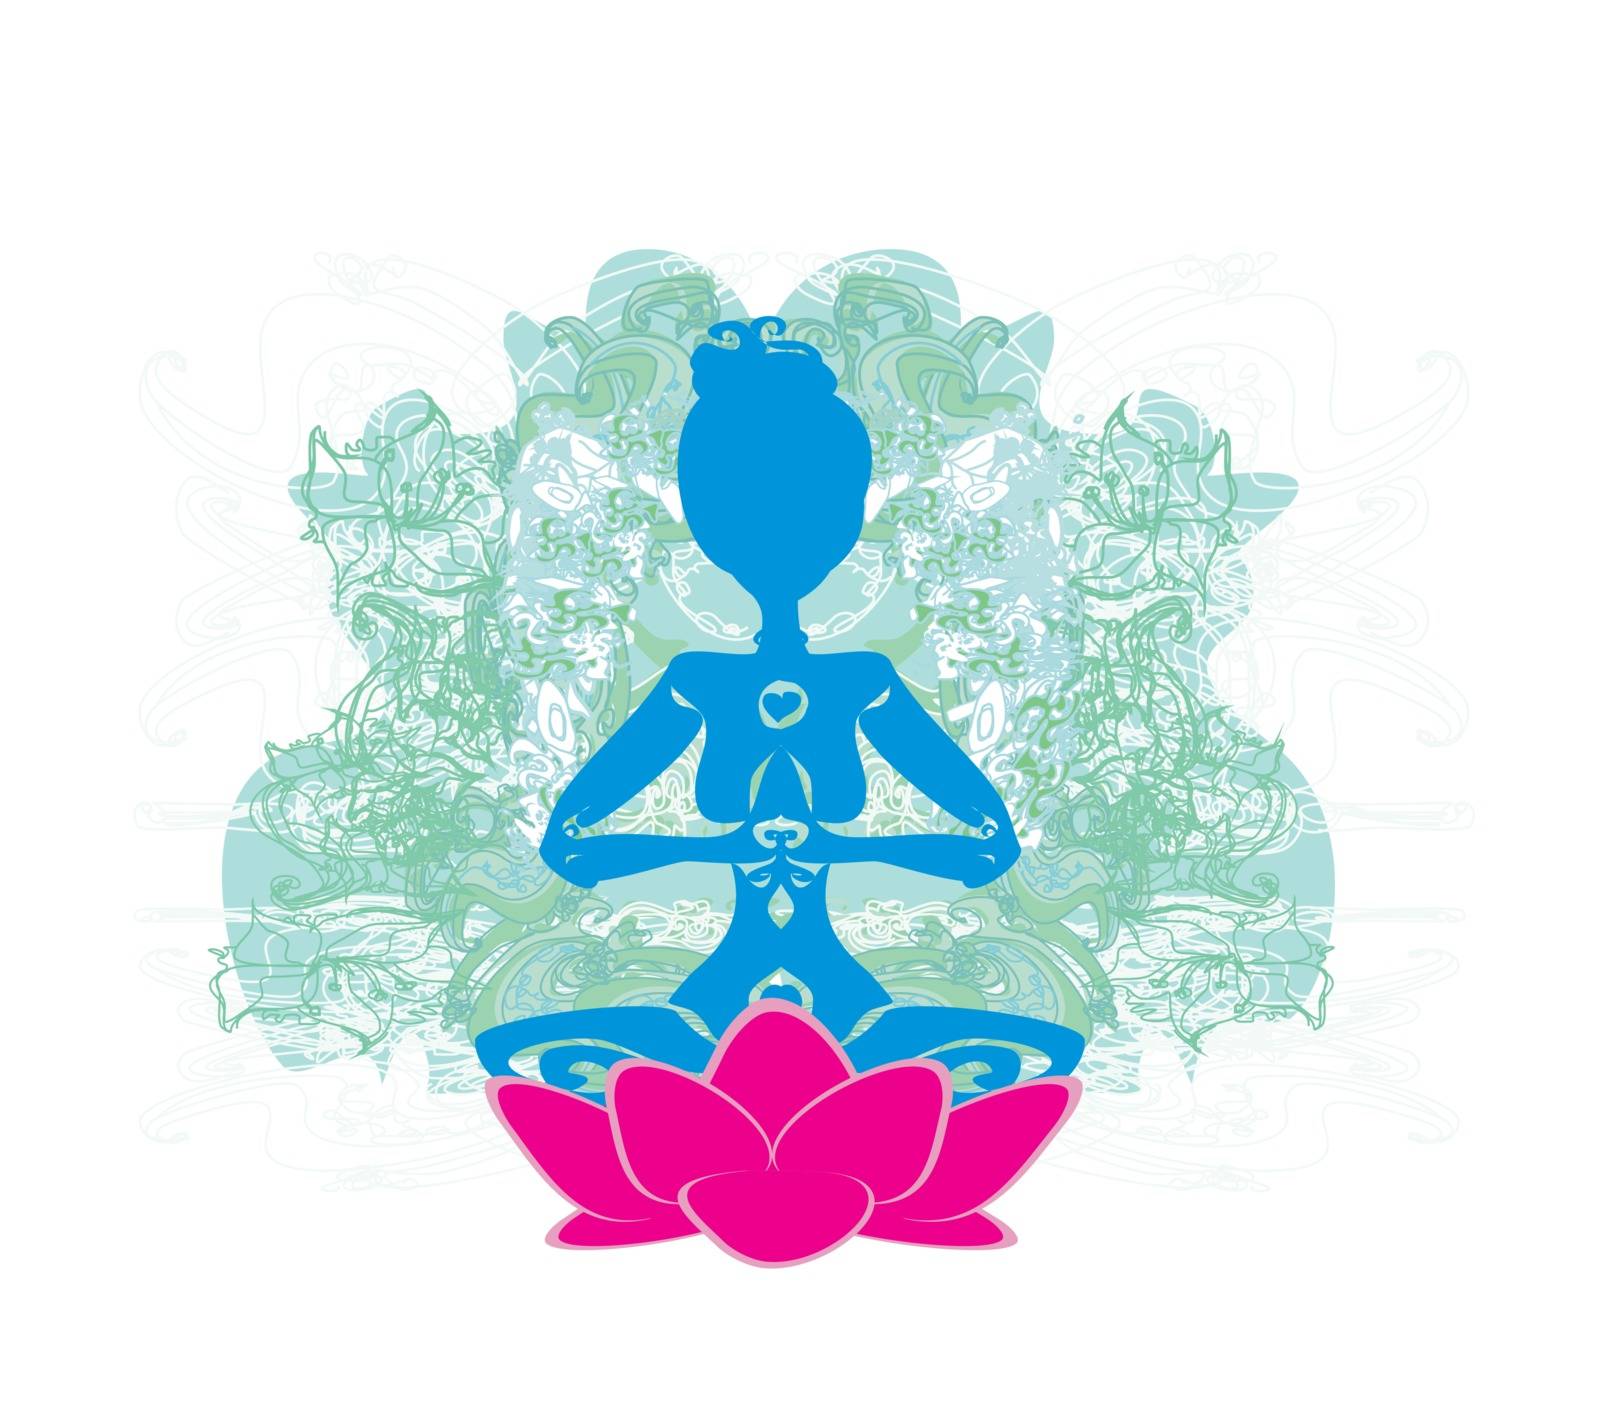 Yoga and Spirituality by JackyBrown